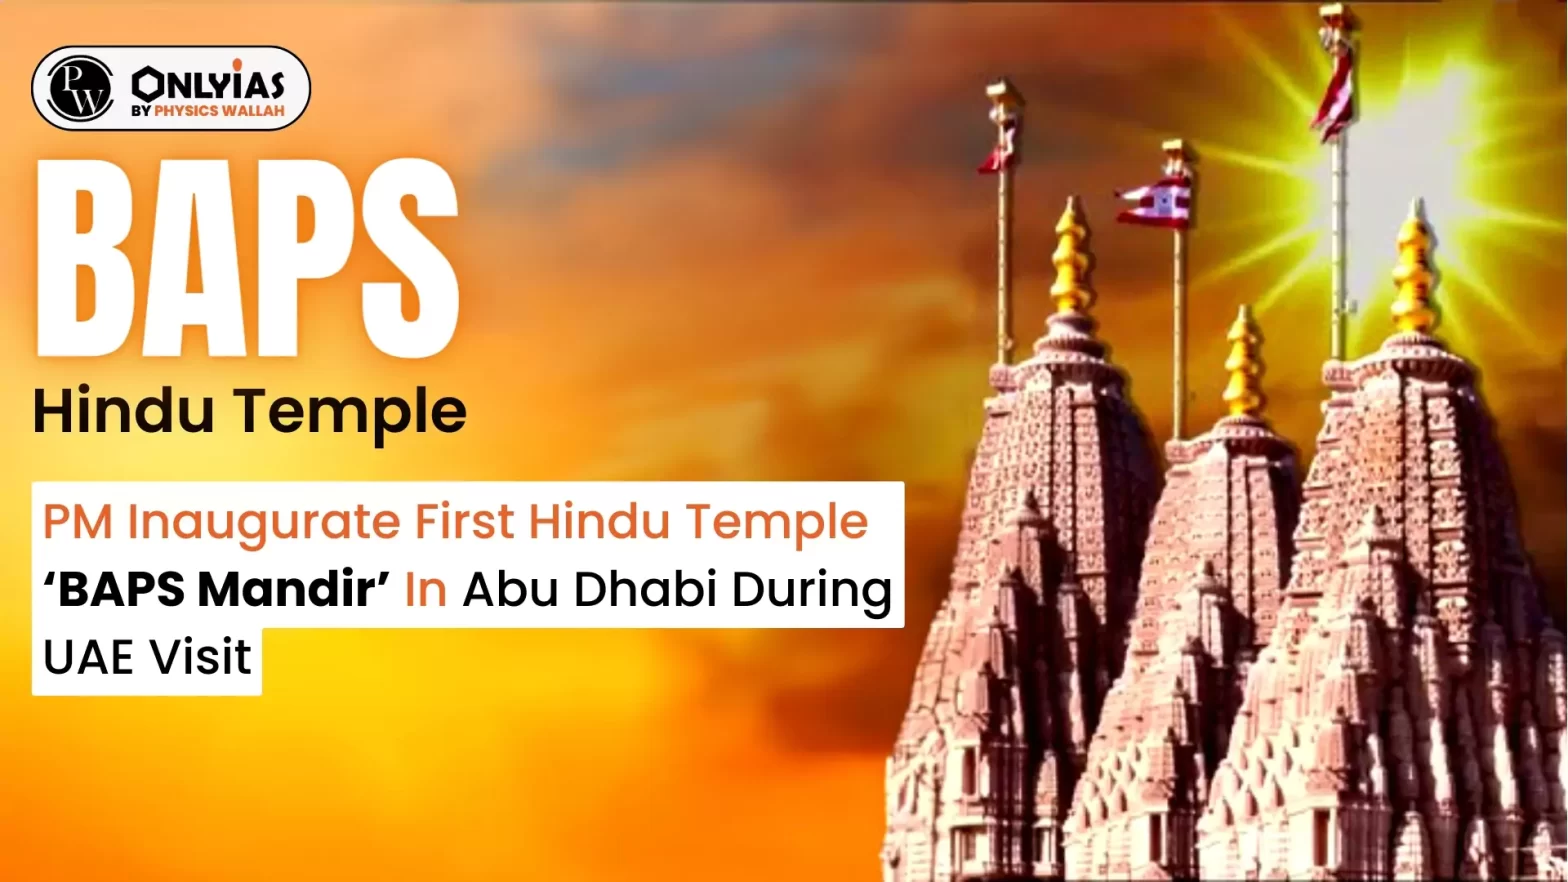 BAPS Hindu Temple: PM to Inaugurate First Hindu Temple in Abu Dhabi